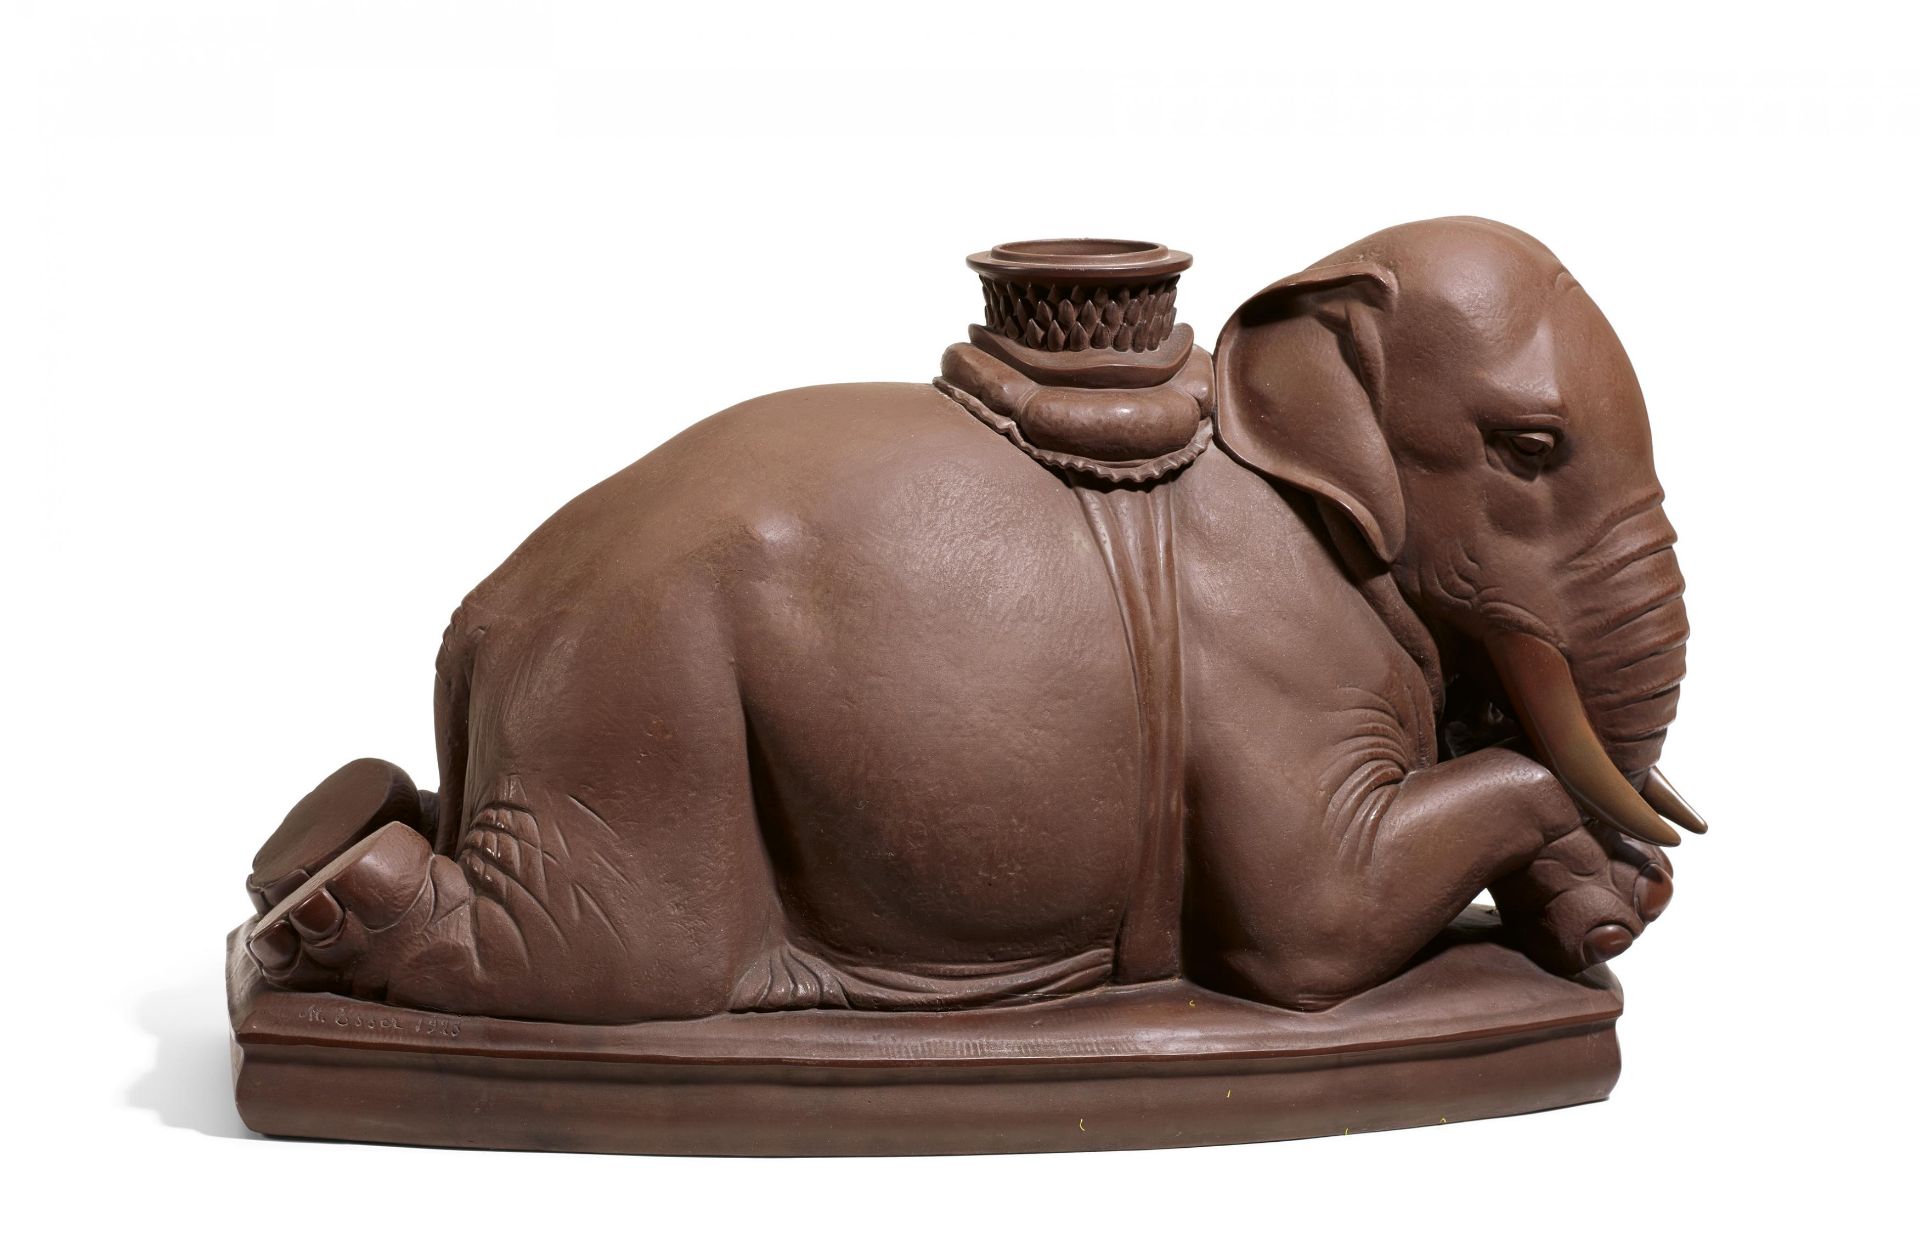 BÖTTGER STONEWARE FIGURINE OF A RESTING ELEPHANT. Meissen. Date: 1924-34. Maker/Designer: Model